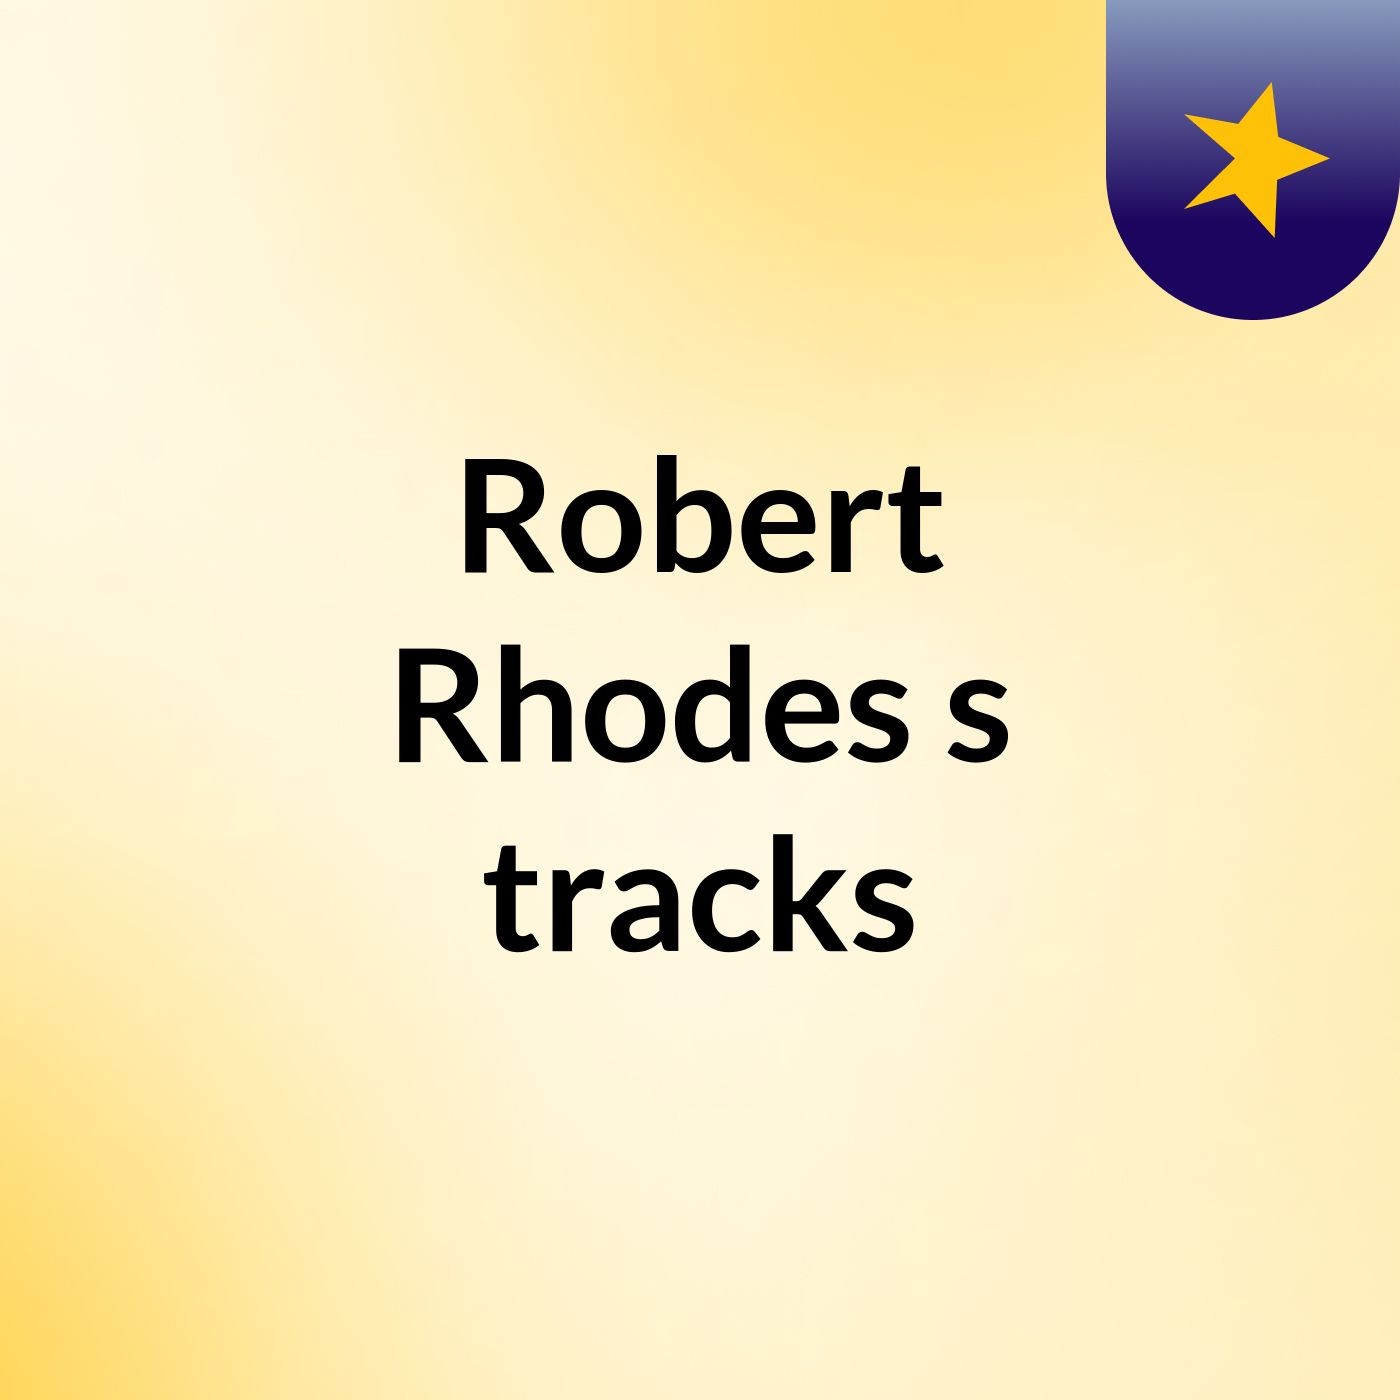 Robert Rhodes's tracks